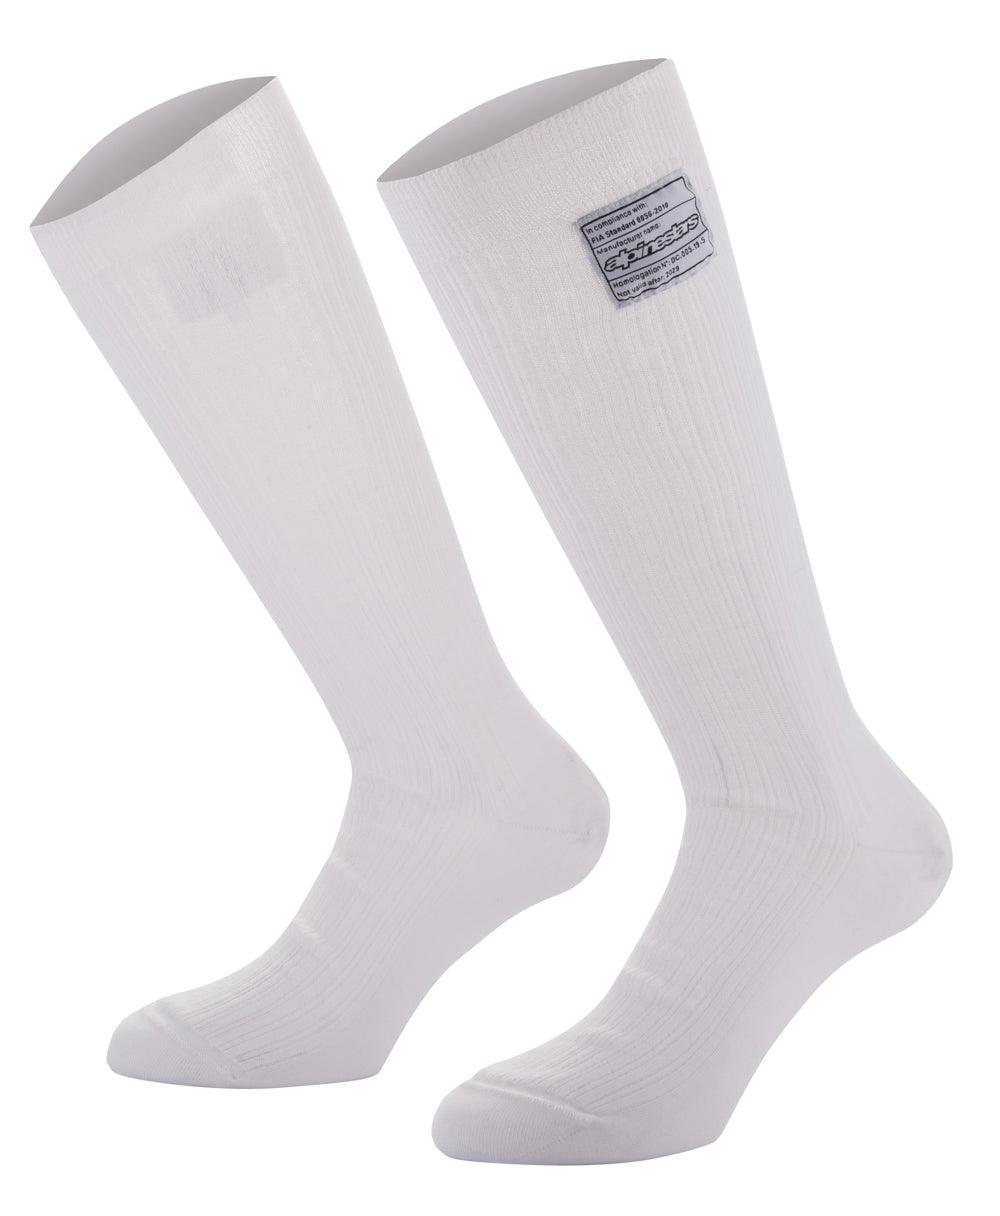 Socks Race V4 White X-Large - Burlile Performance Products